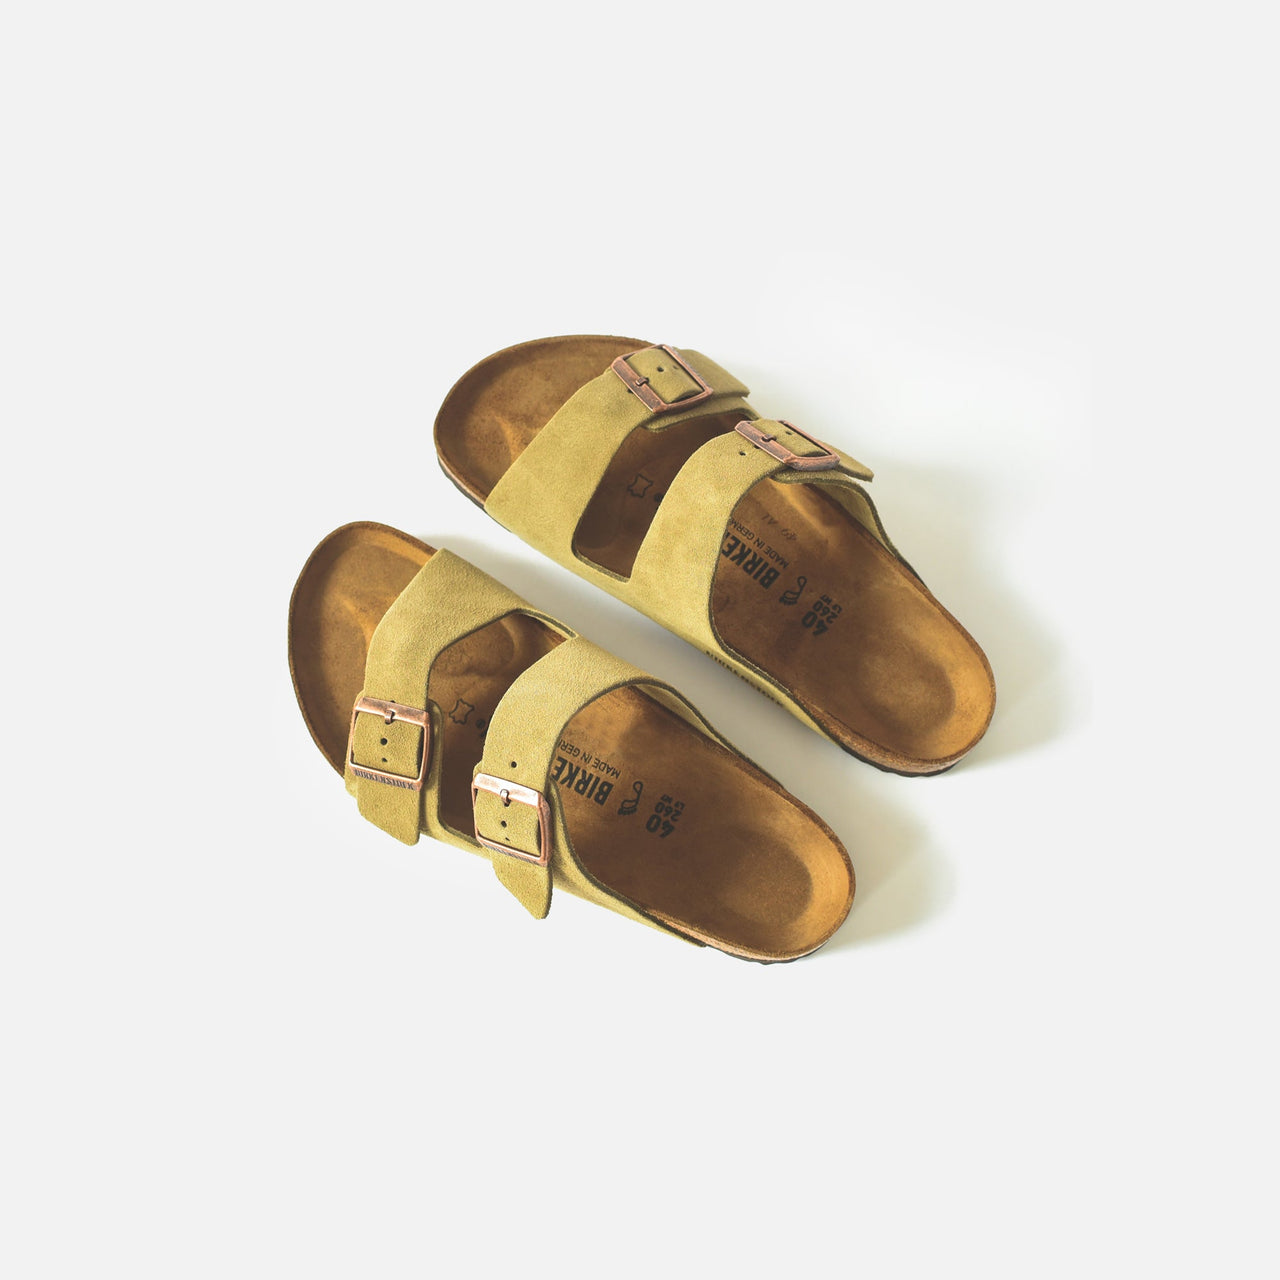 Women's Arizona Suede Taupe Birkenstock sandals featuring comfortable two-strap design